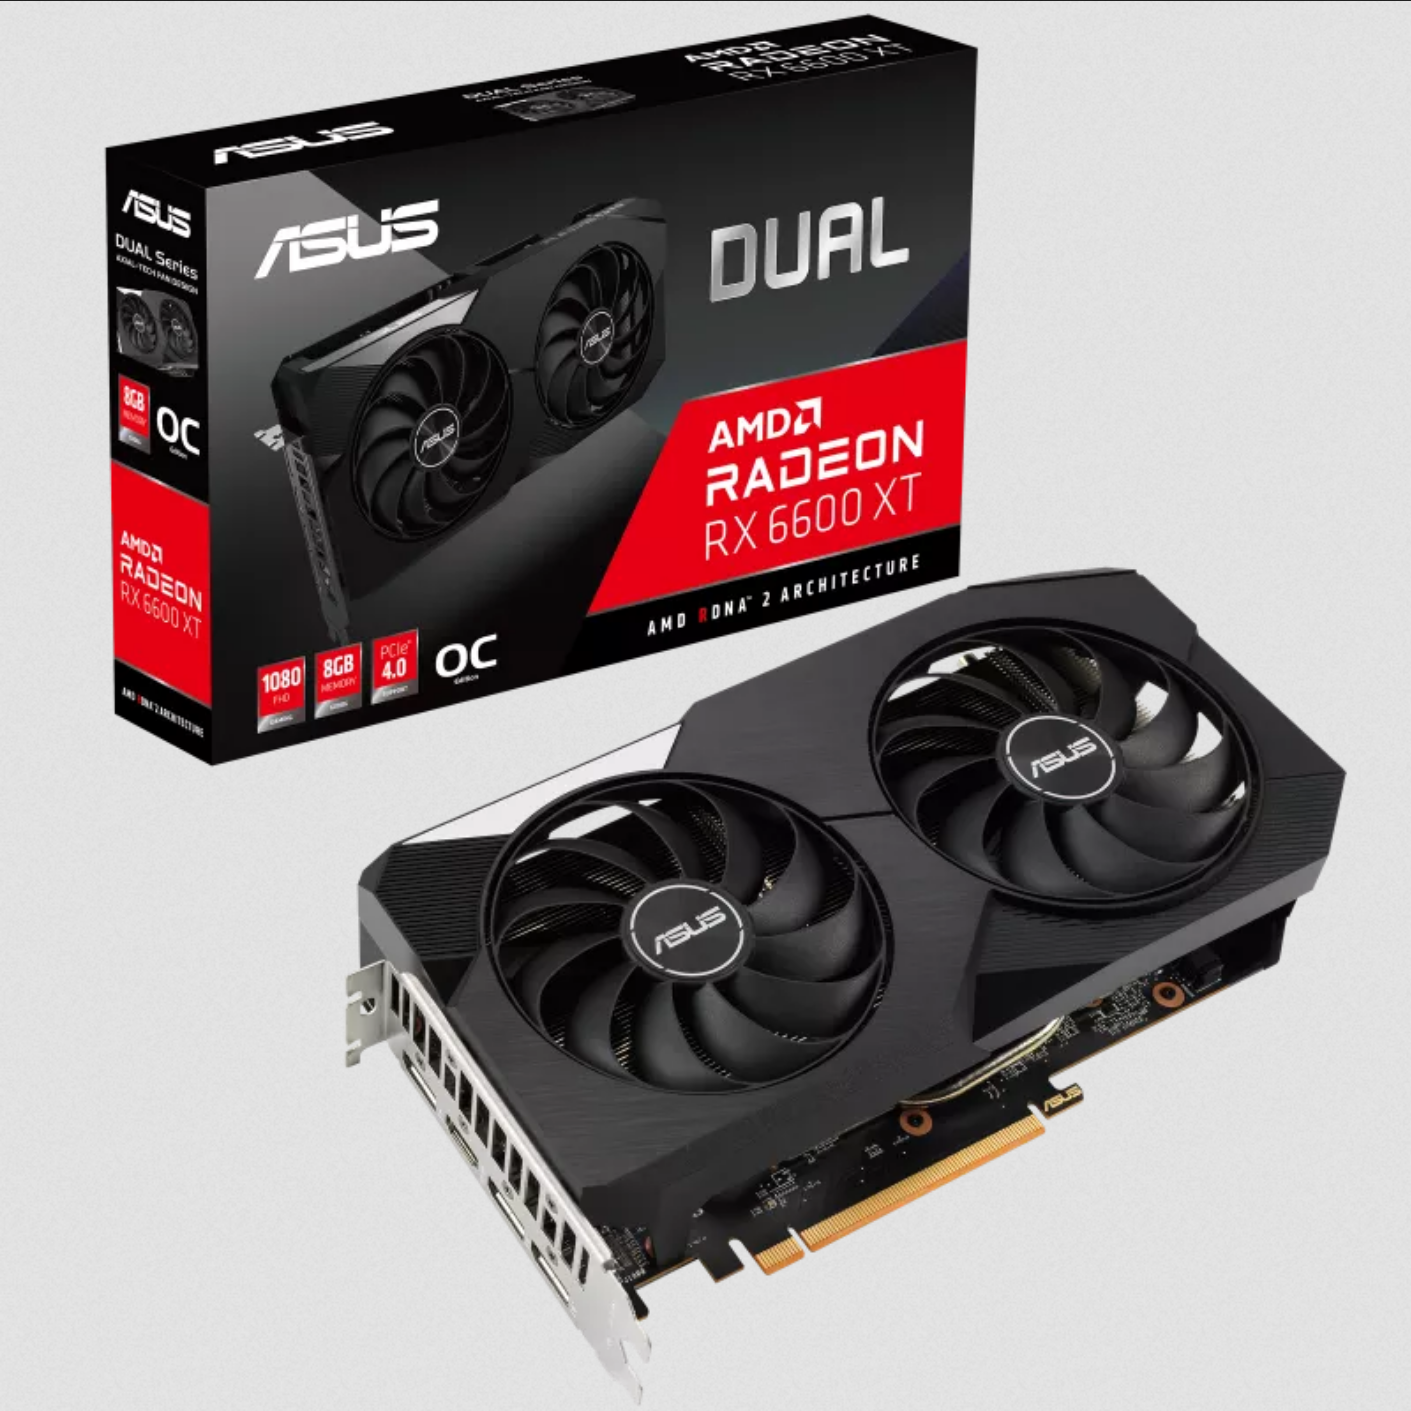 Asus Dual AMD Radeon RX 6600 XT OC Edition 8GB Graphics Card